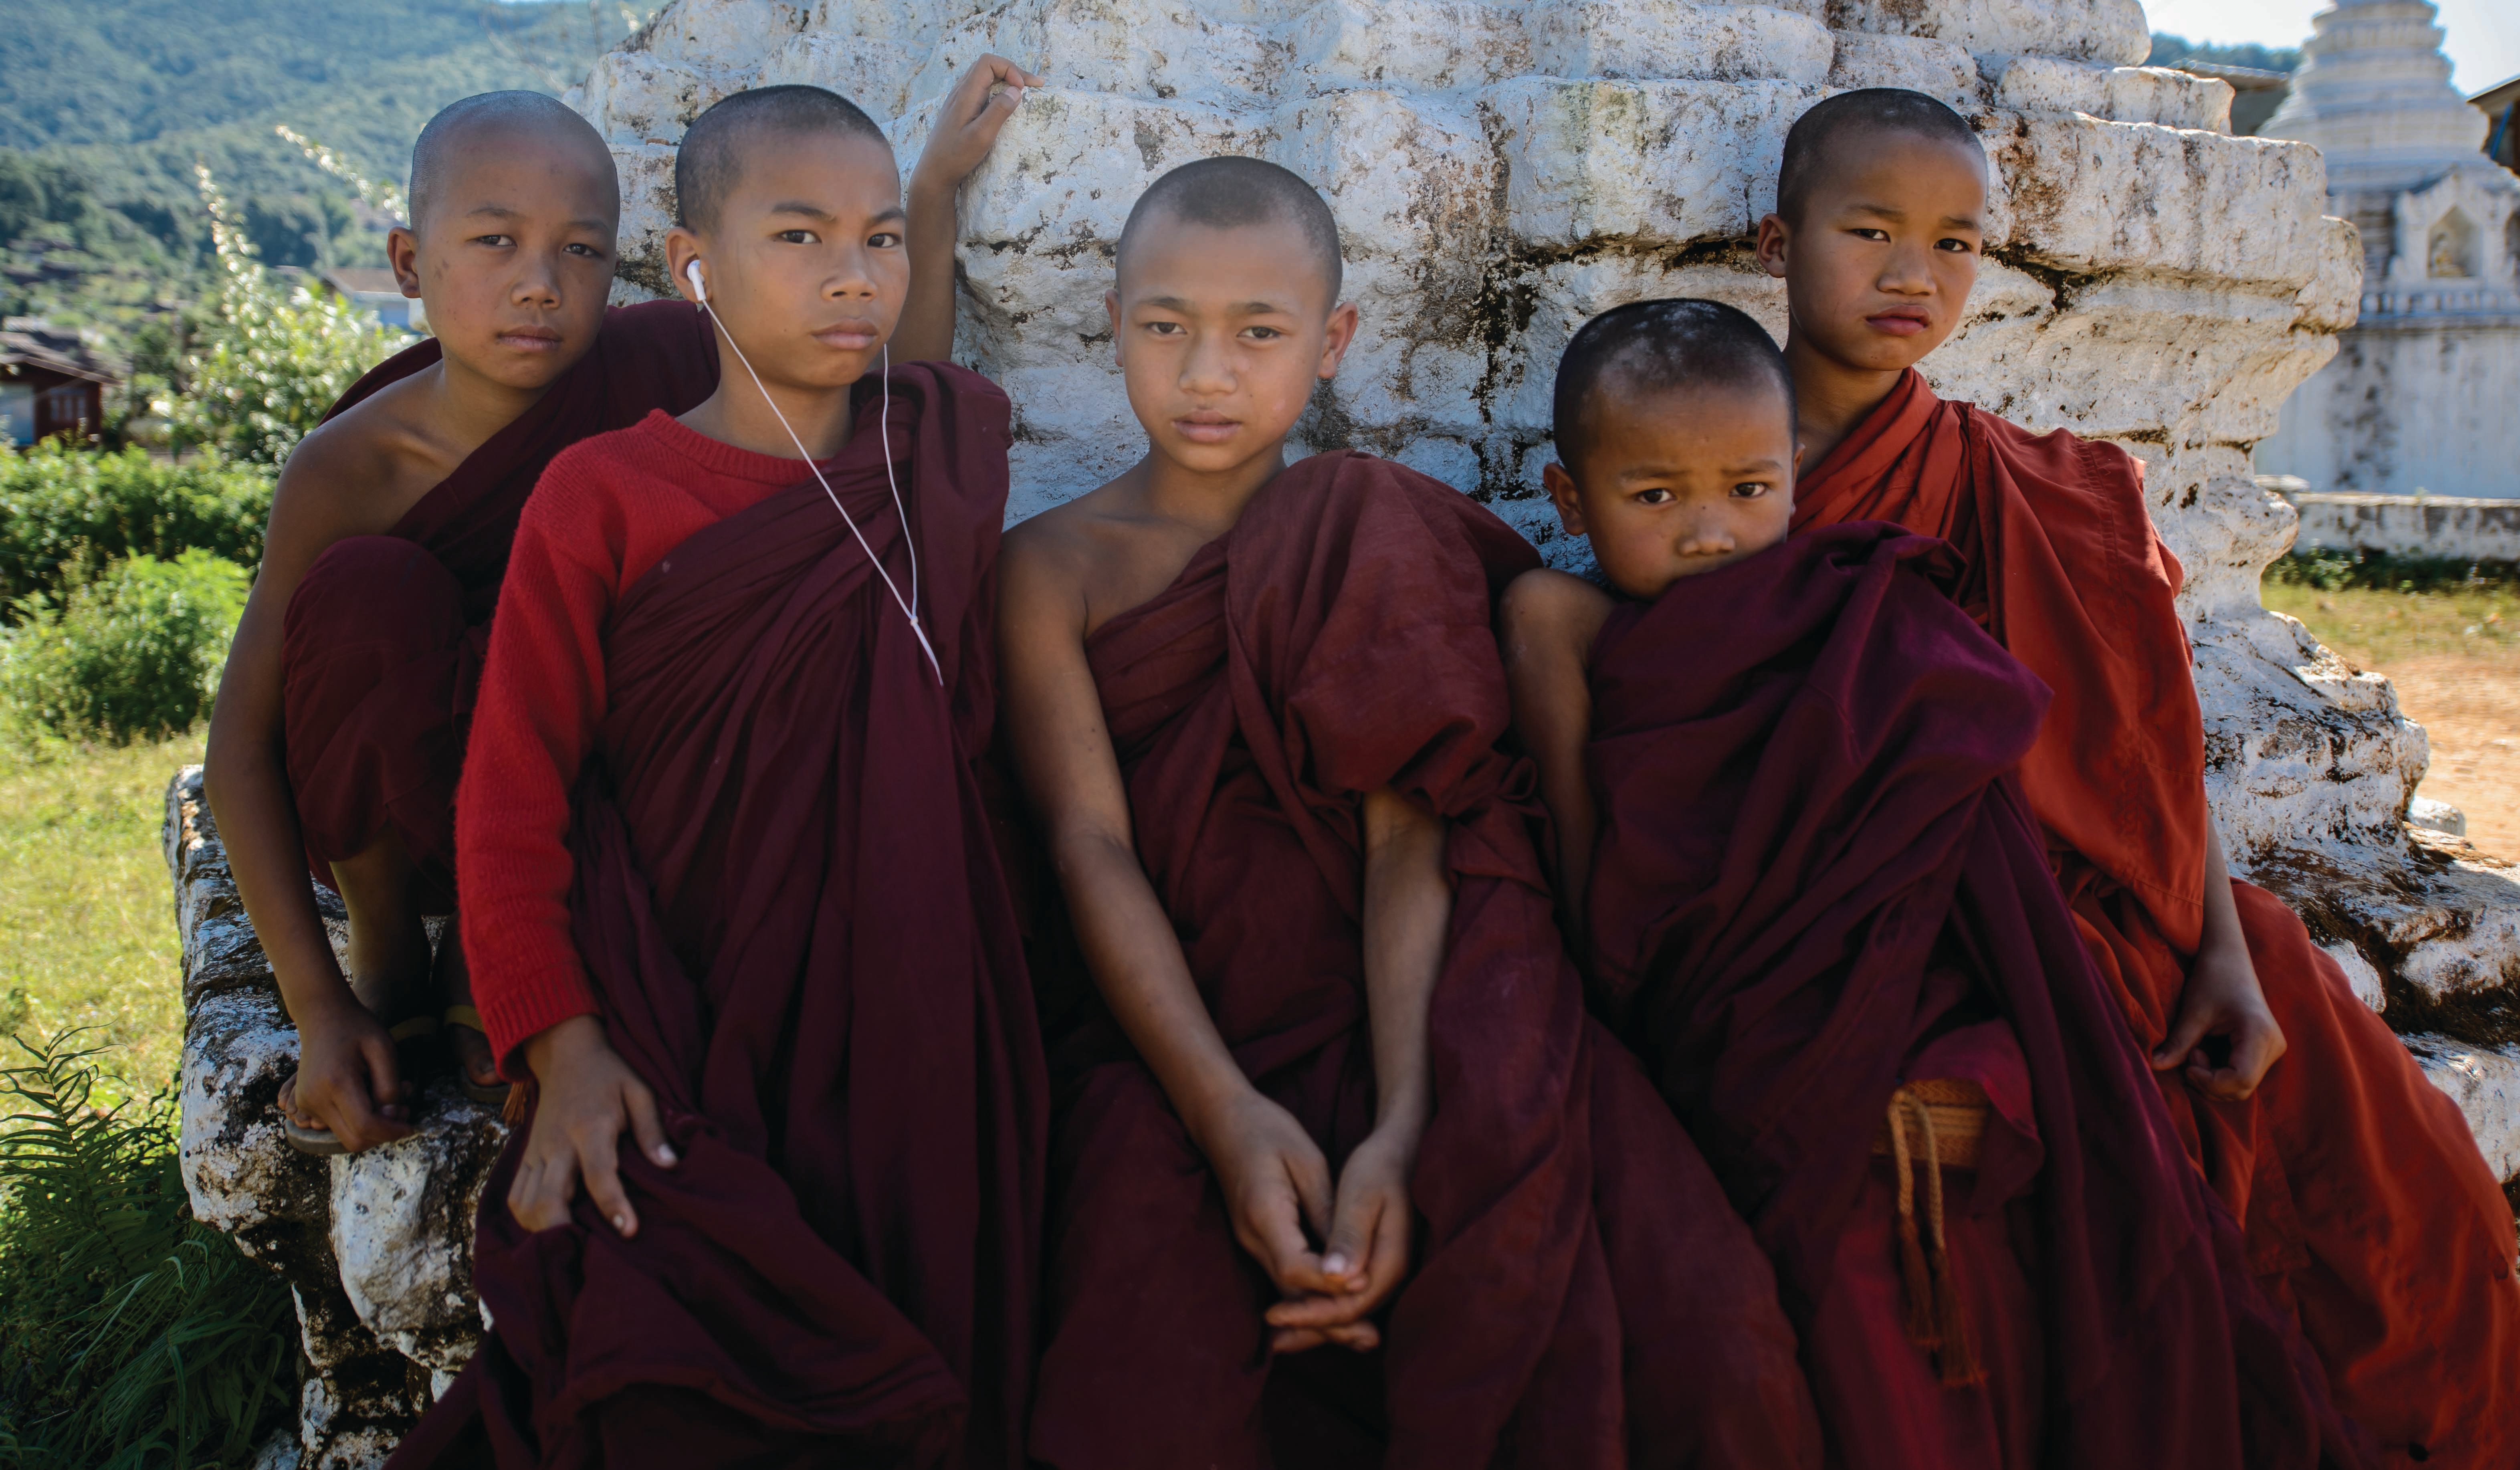 Group of Buddhist boys